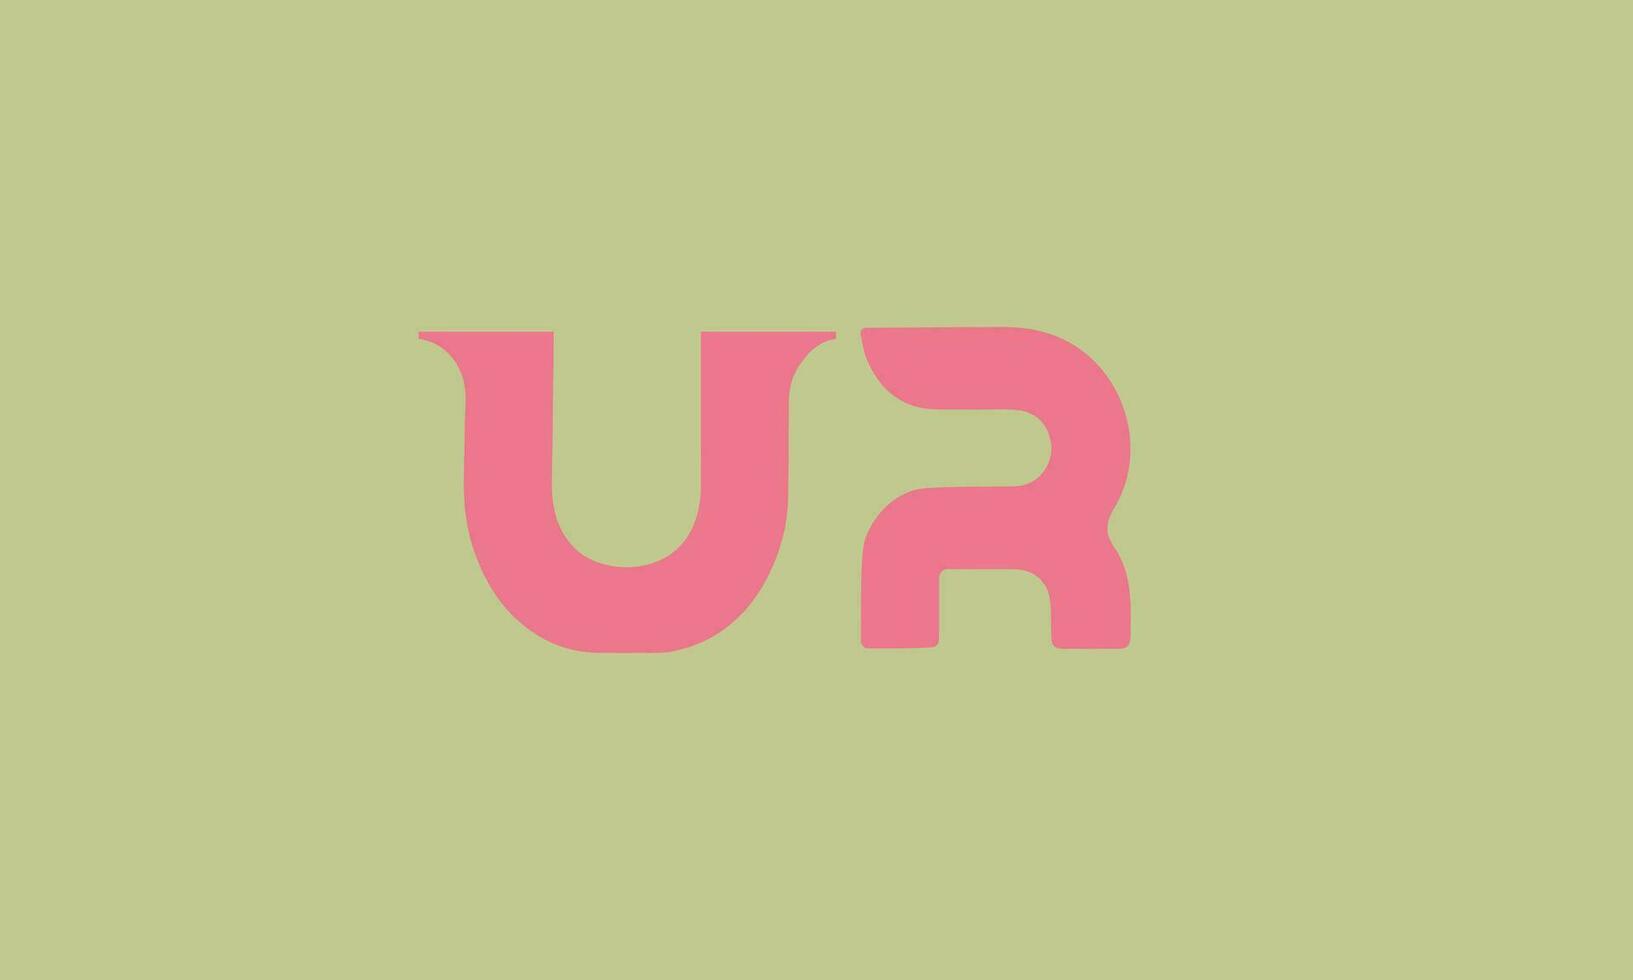 ru, jij, r, u abstract brieven logo monogram vector